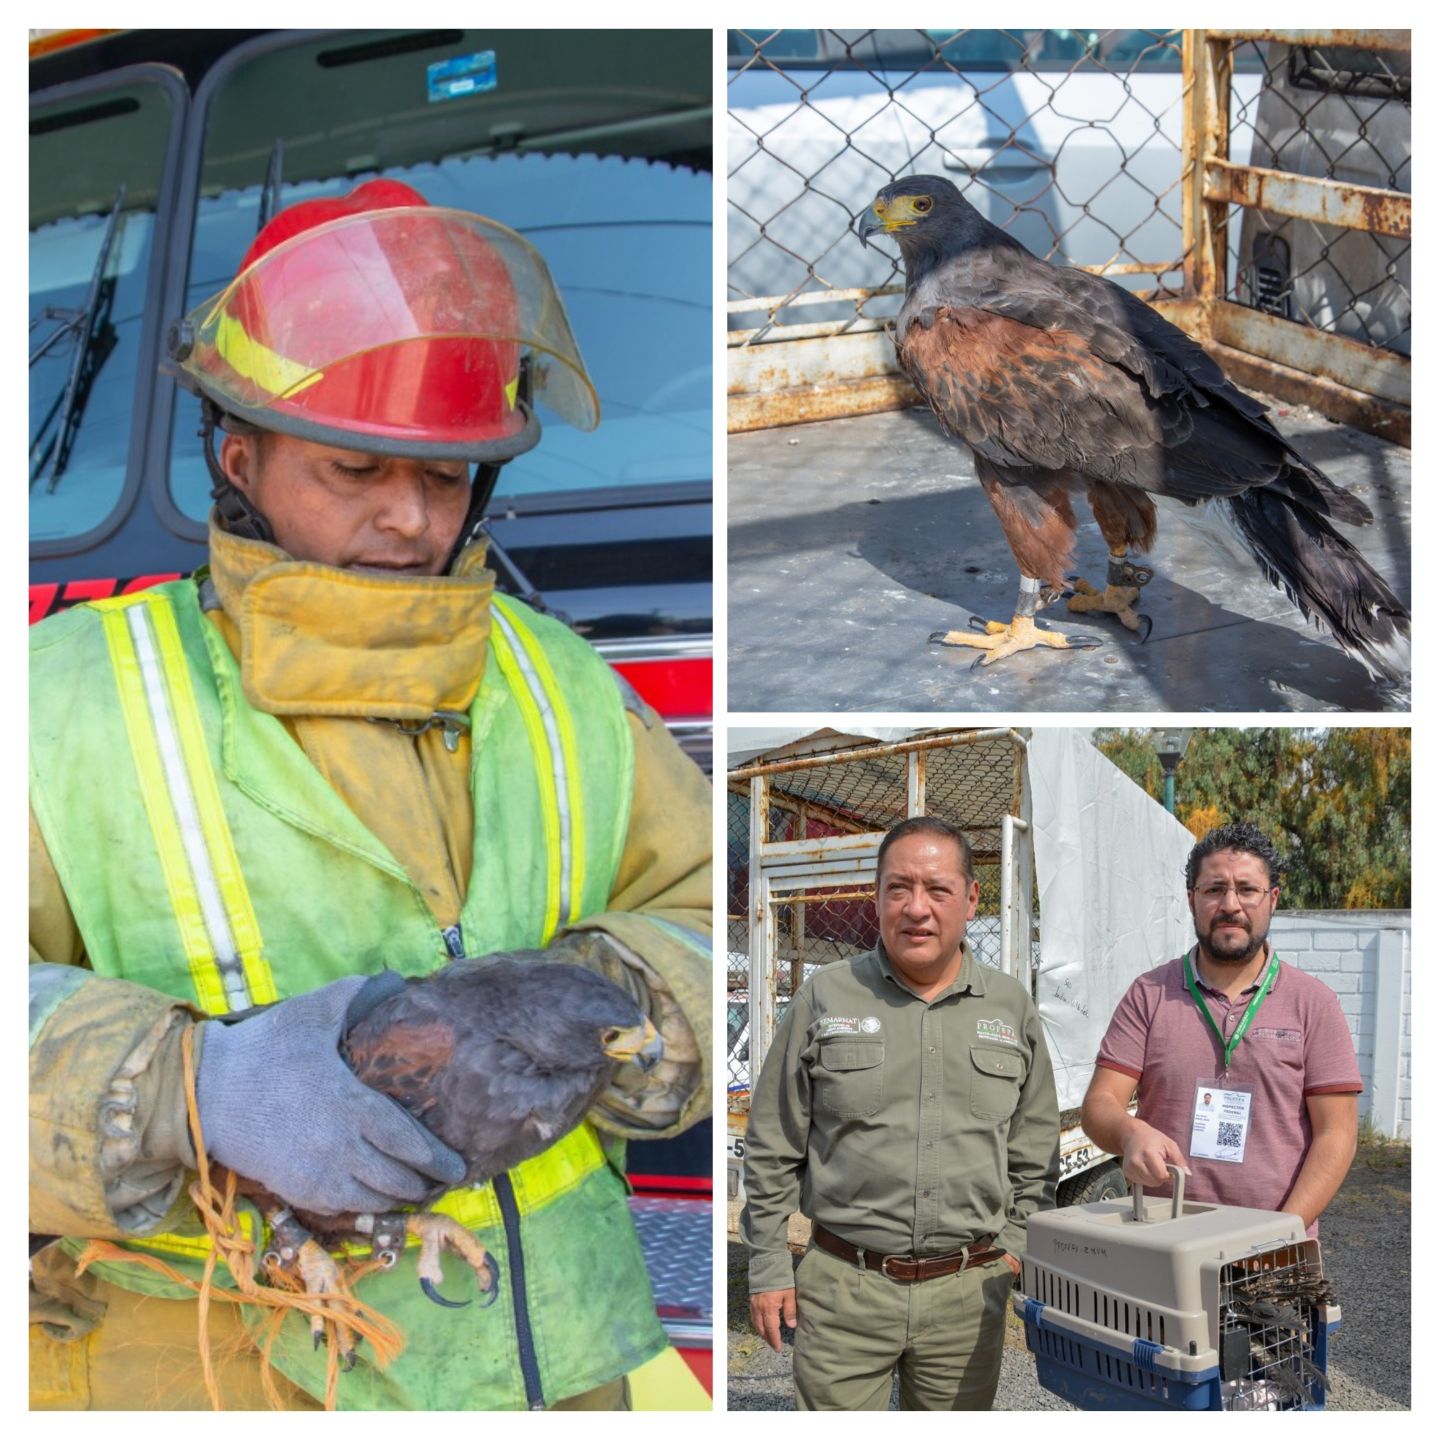 Gobierno municipal entrega ave
Quebrantahuesos a PROFEPA
